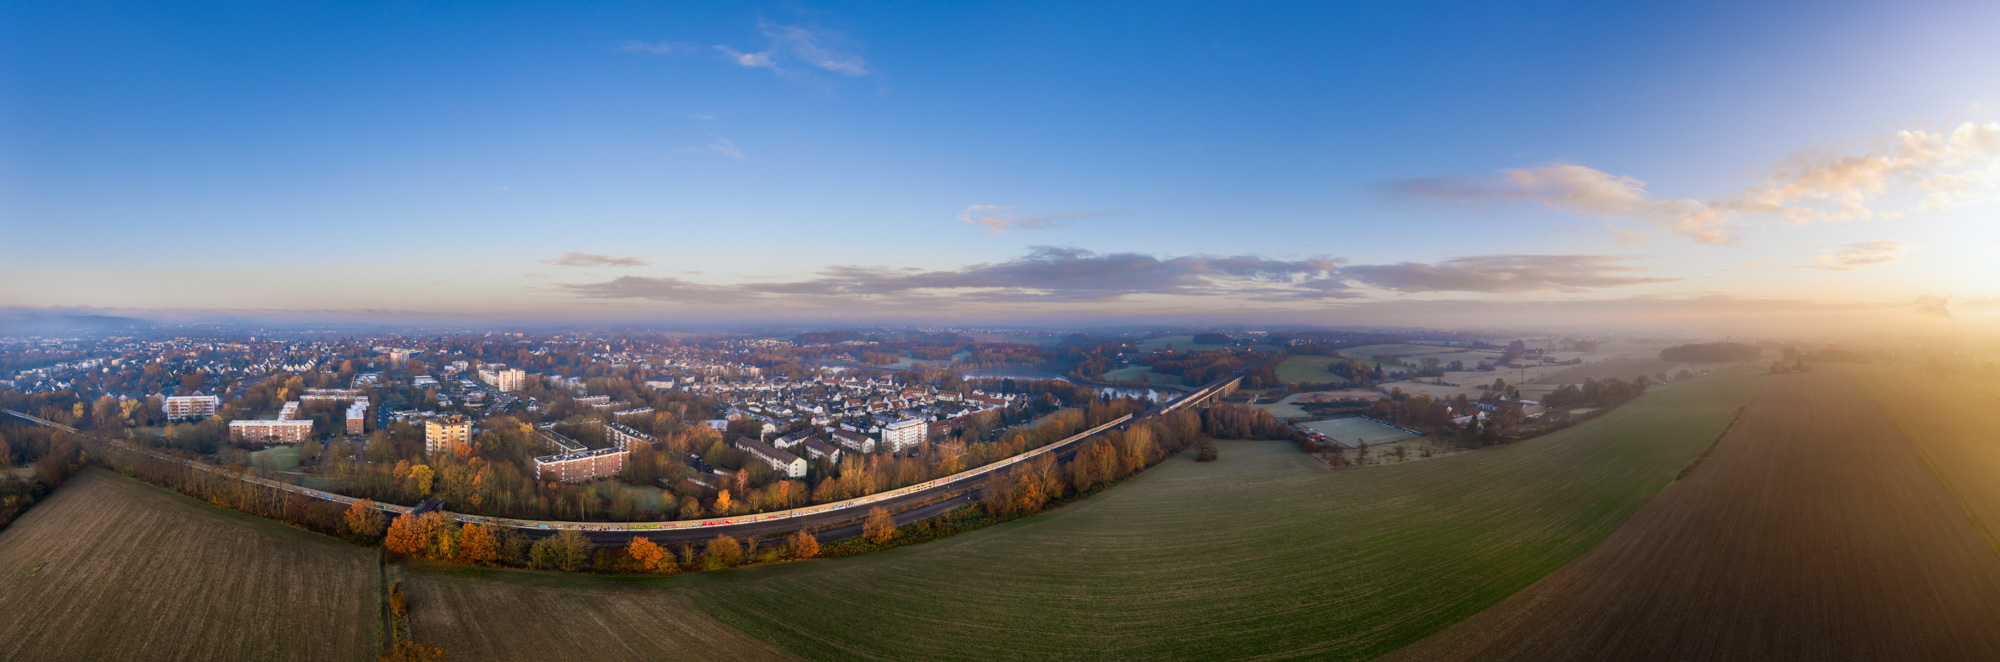 District 'Schildesche' from the air in November 2019.